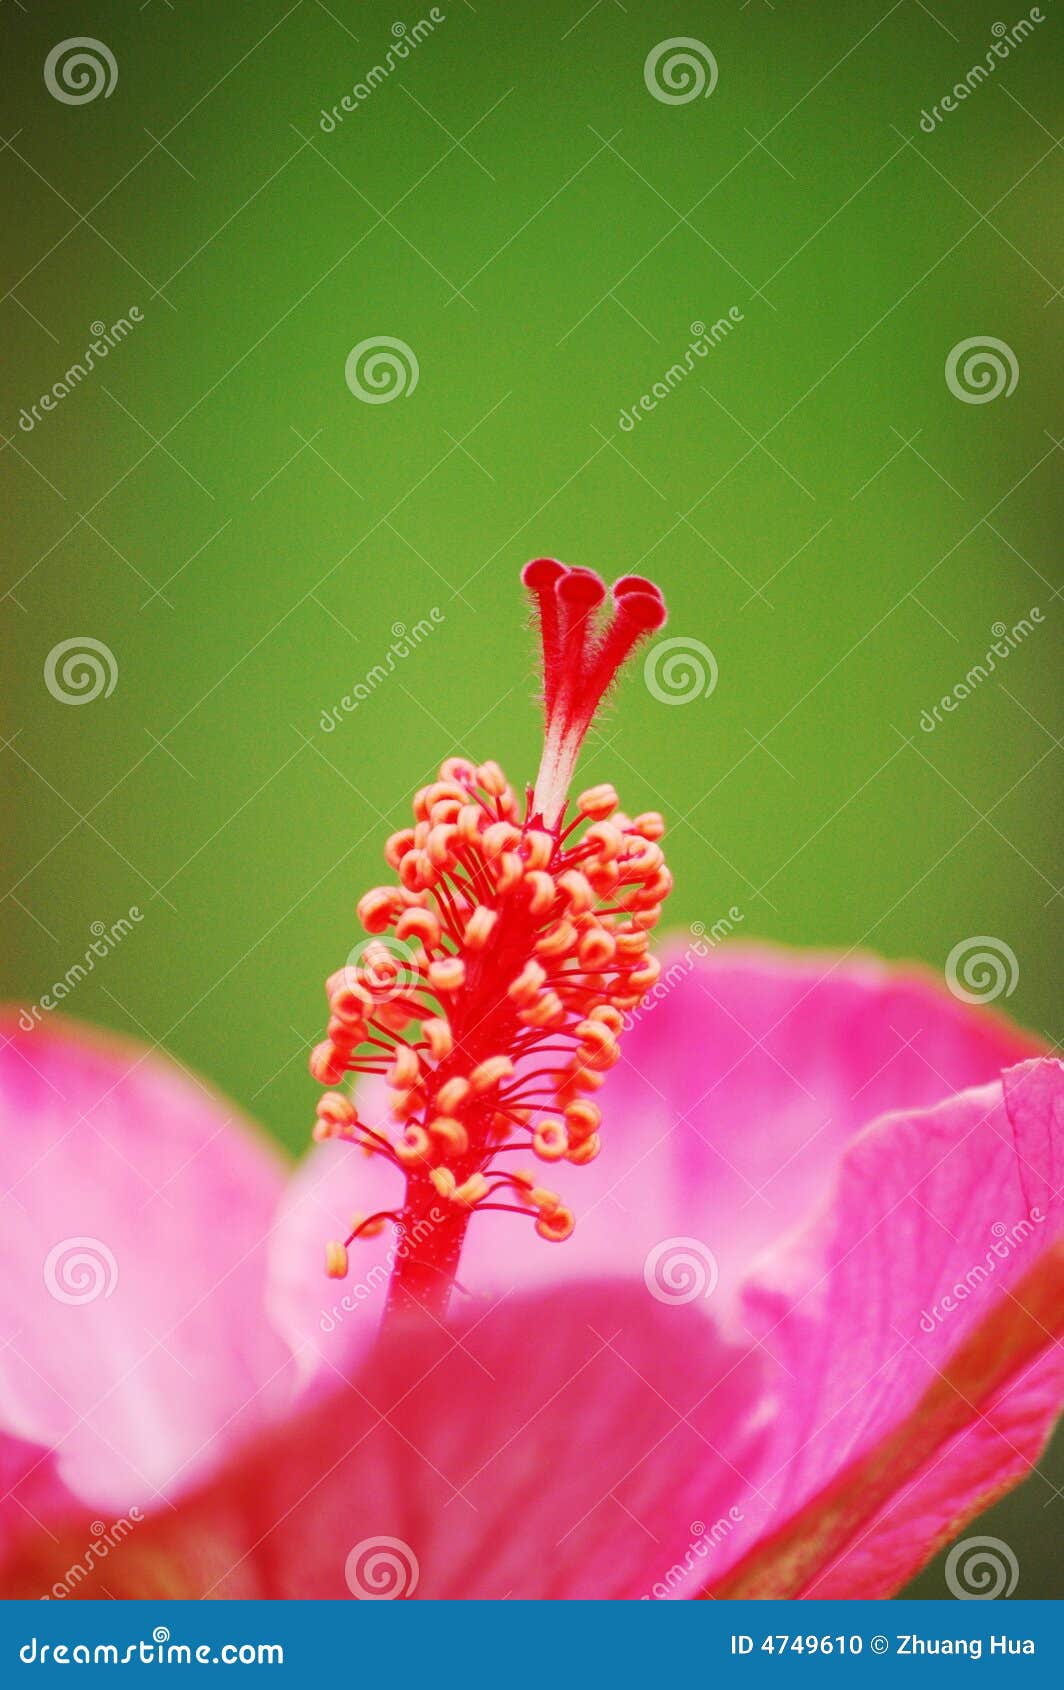 stamen of hibiscus